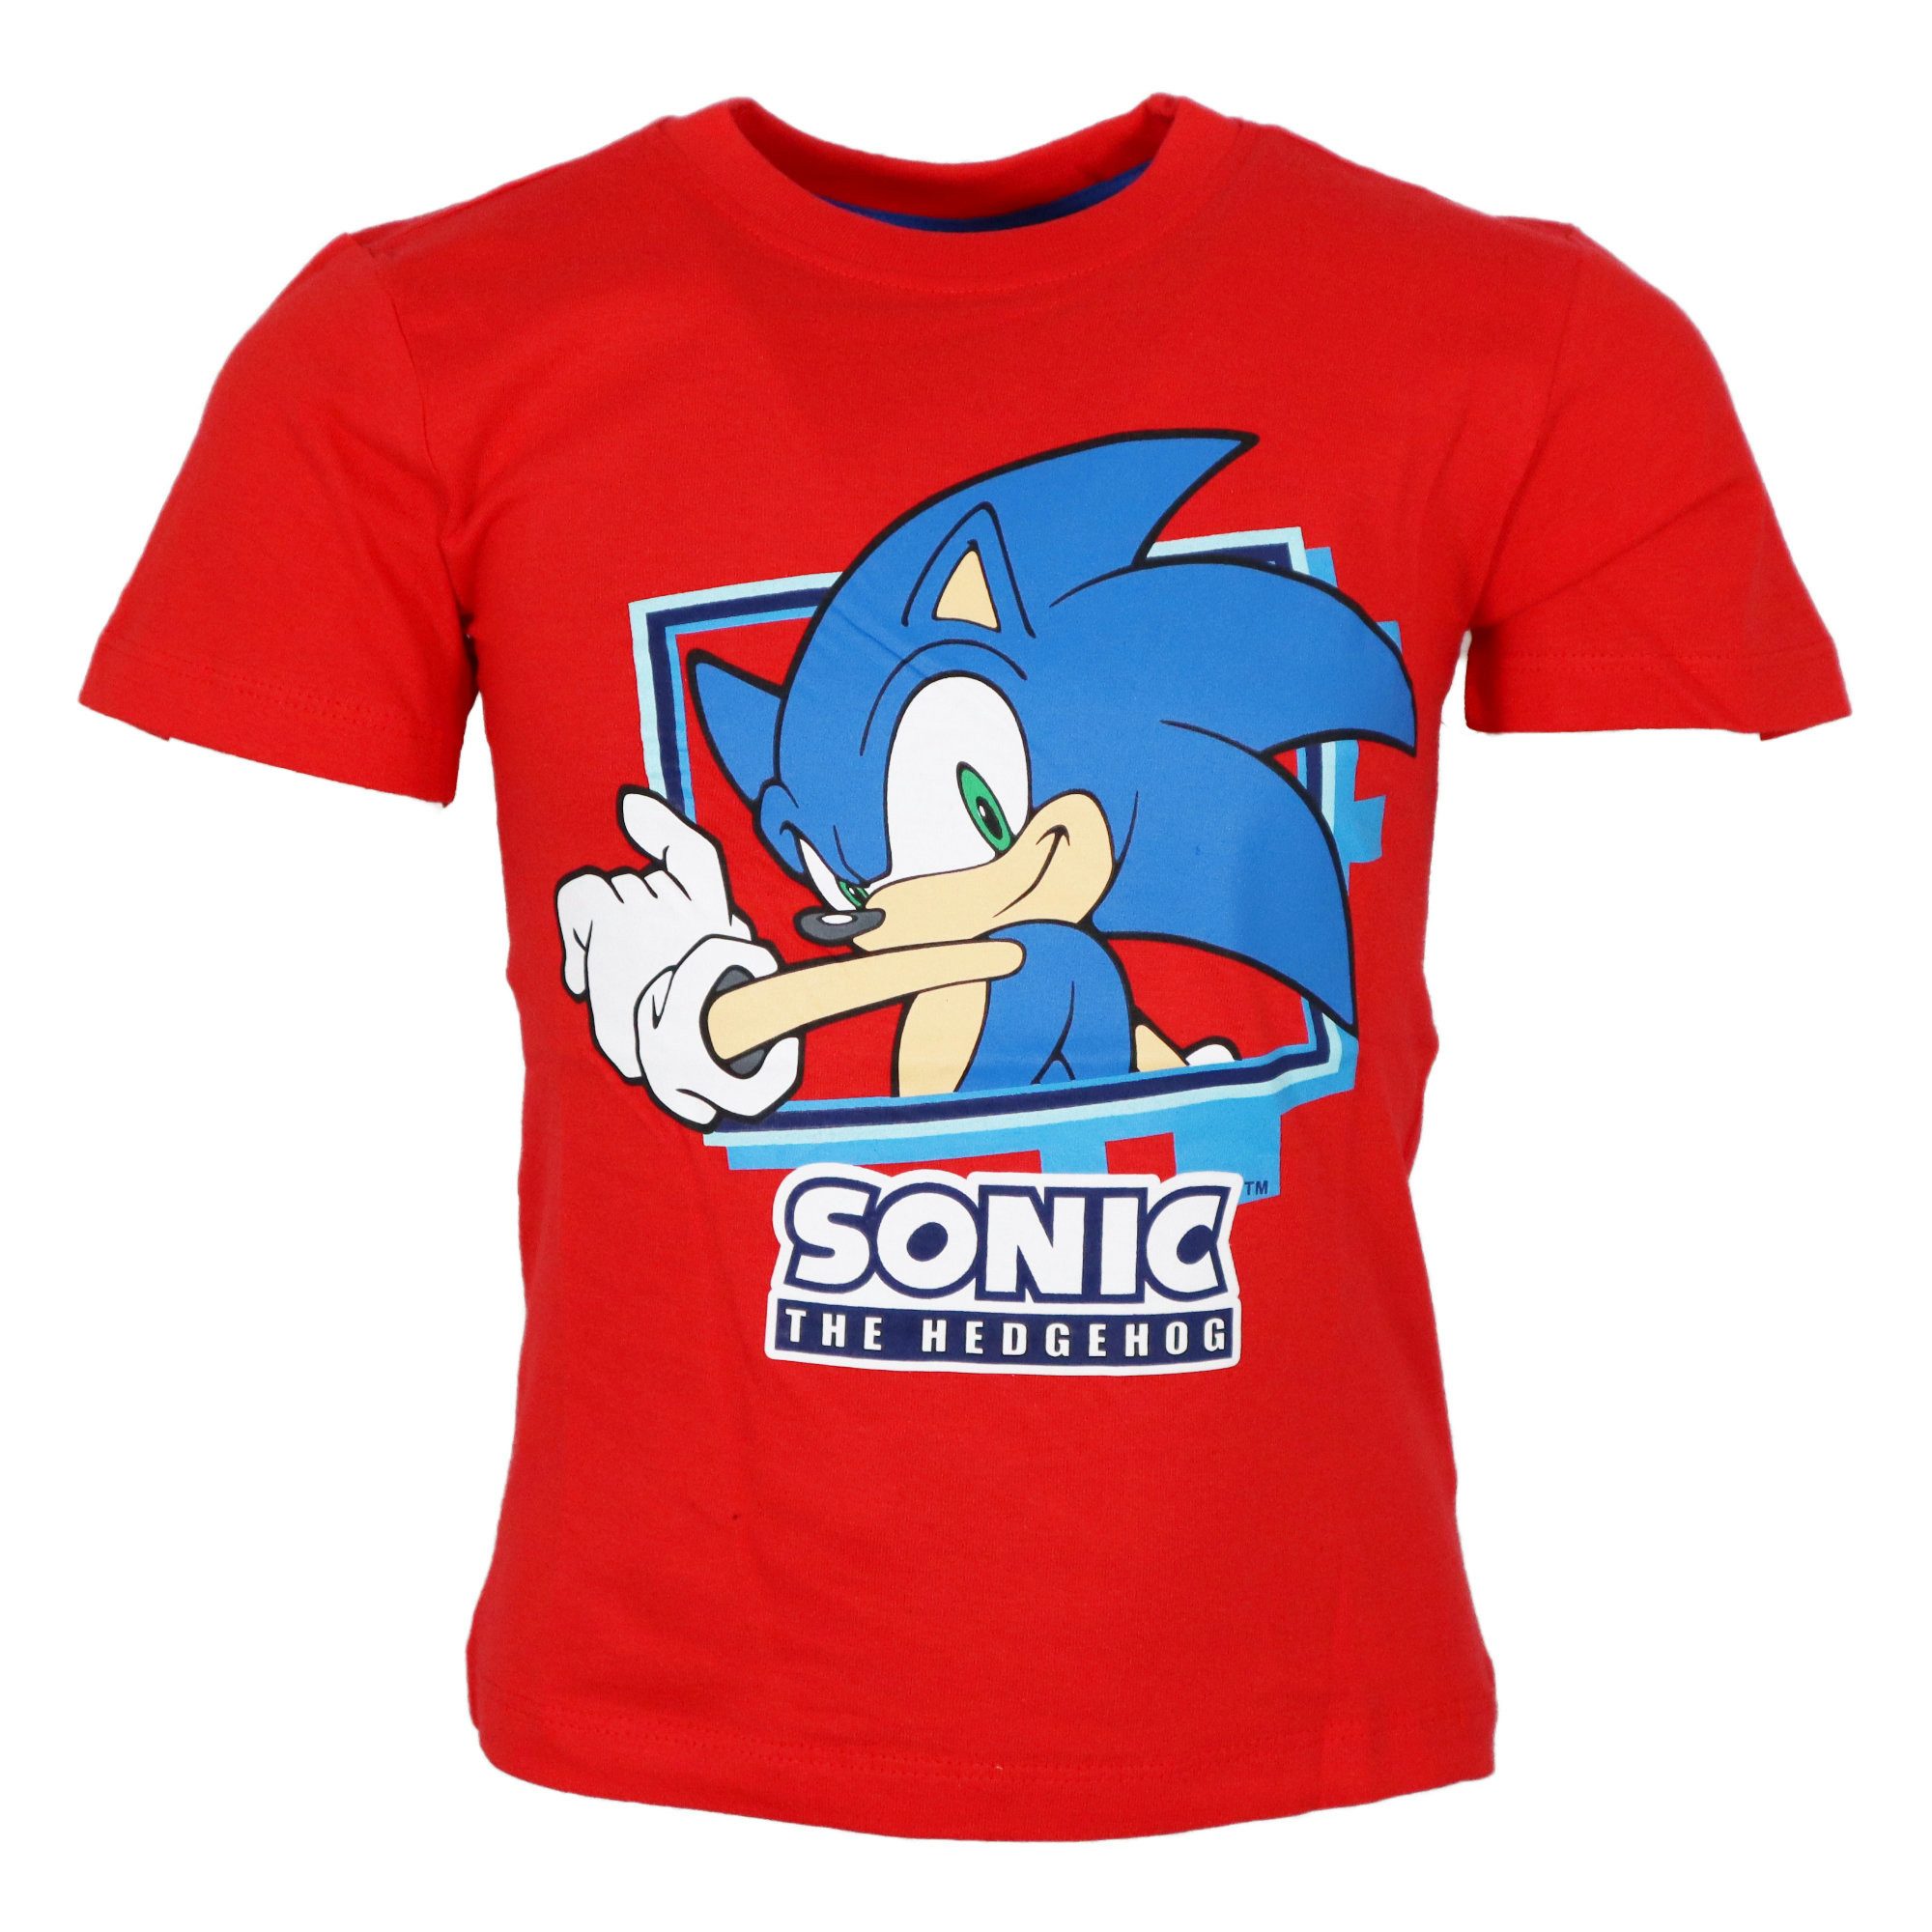 Sonic The Hedgehog Print-Shirt Sonic The Hedgehog Kinder Junge kurzarm T-Shirt Shirt Gr. 98 bis 128, Baumwolle